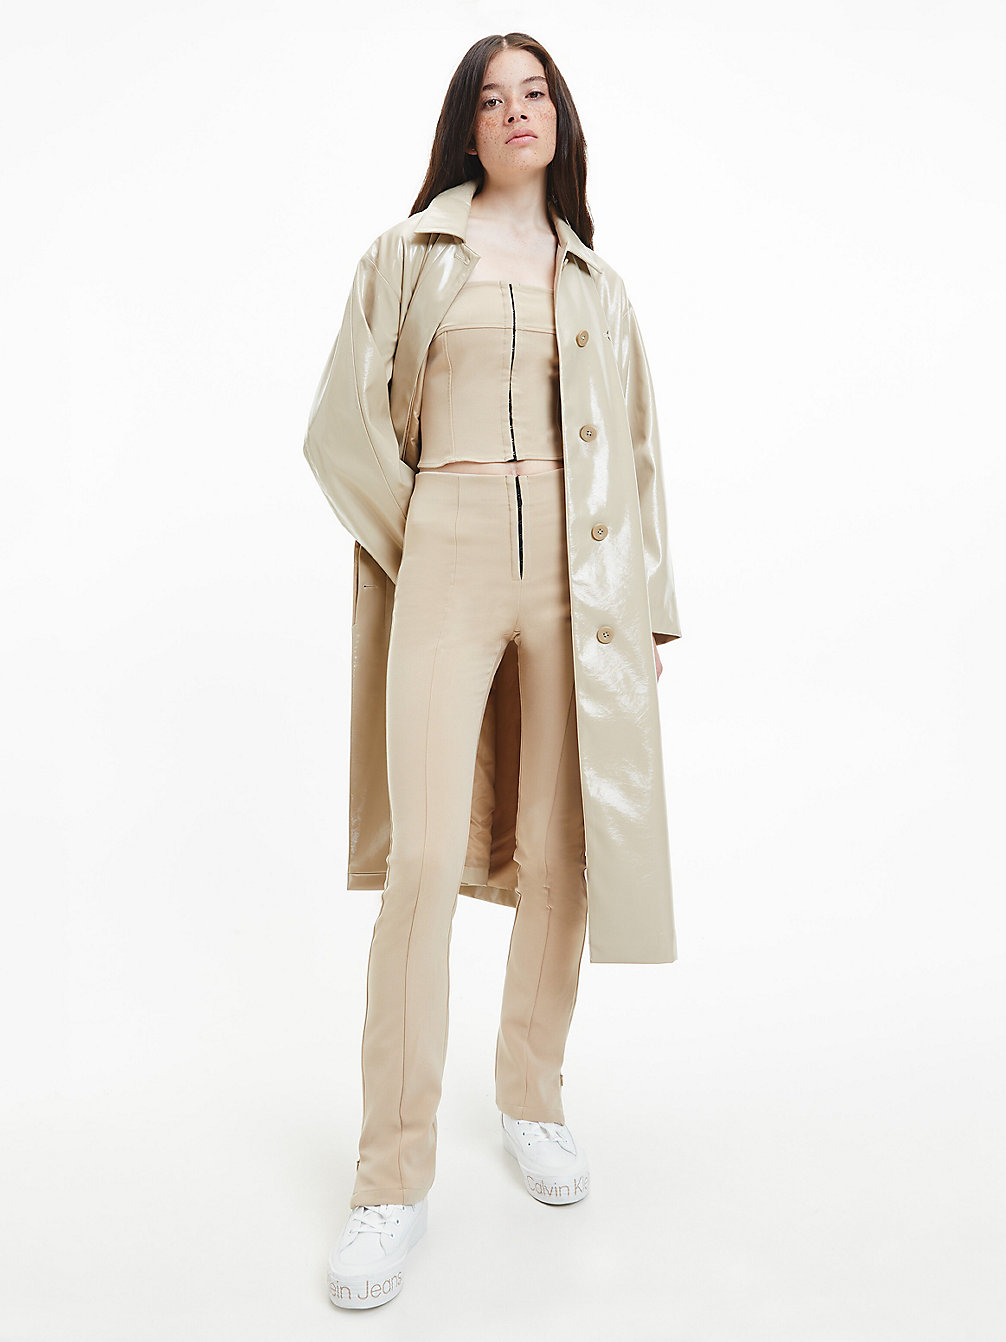 TRAVERTINE Oversized High Gloss Coat undefined women Calvin Klein